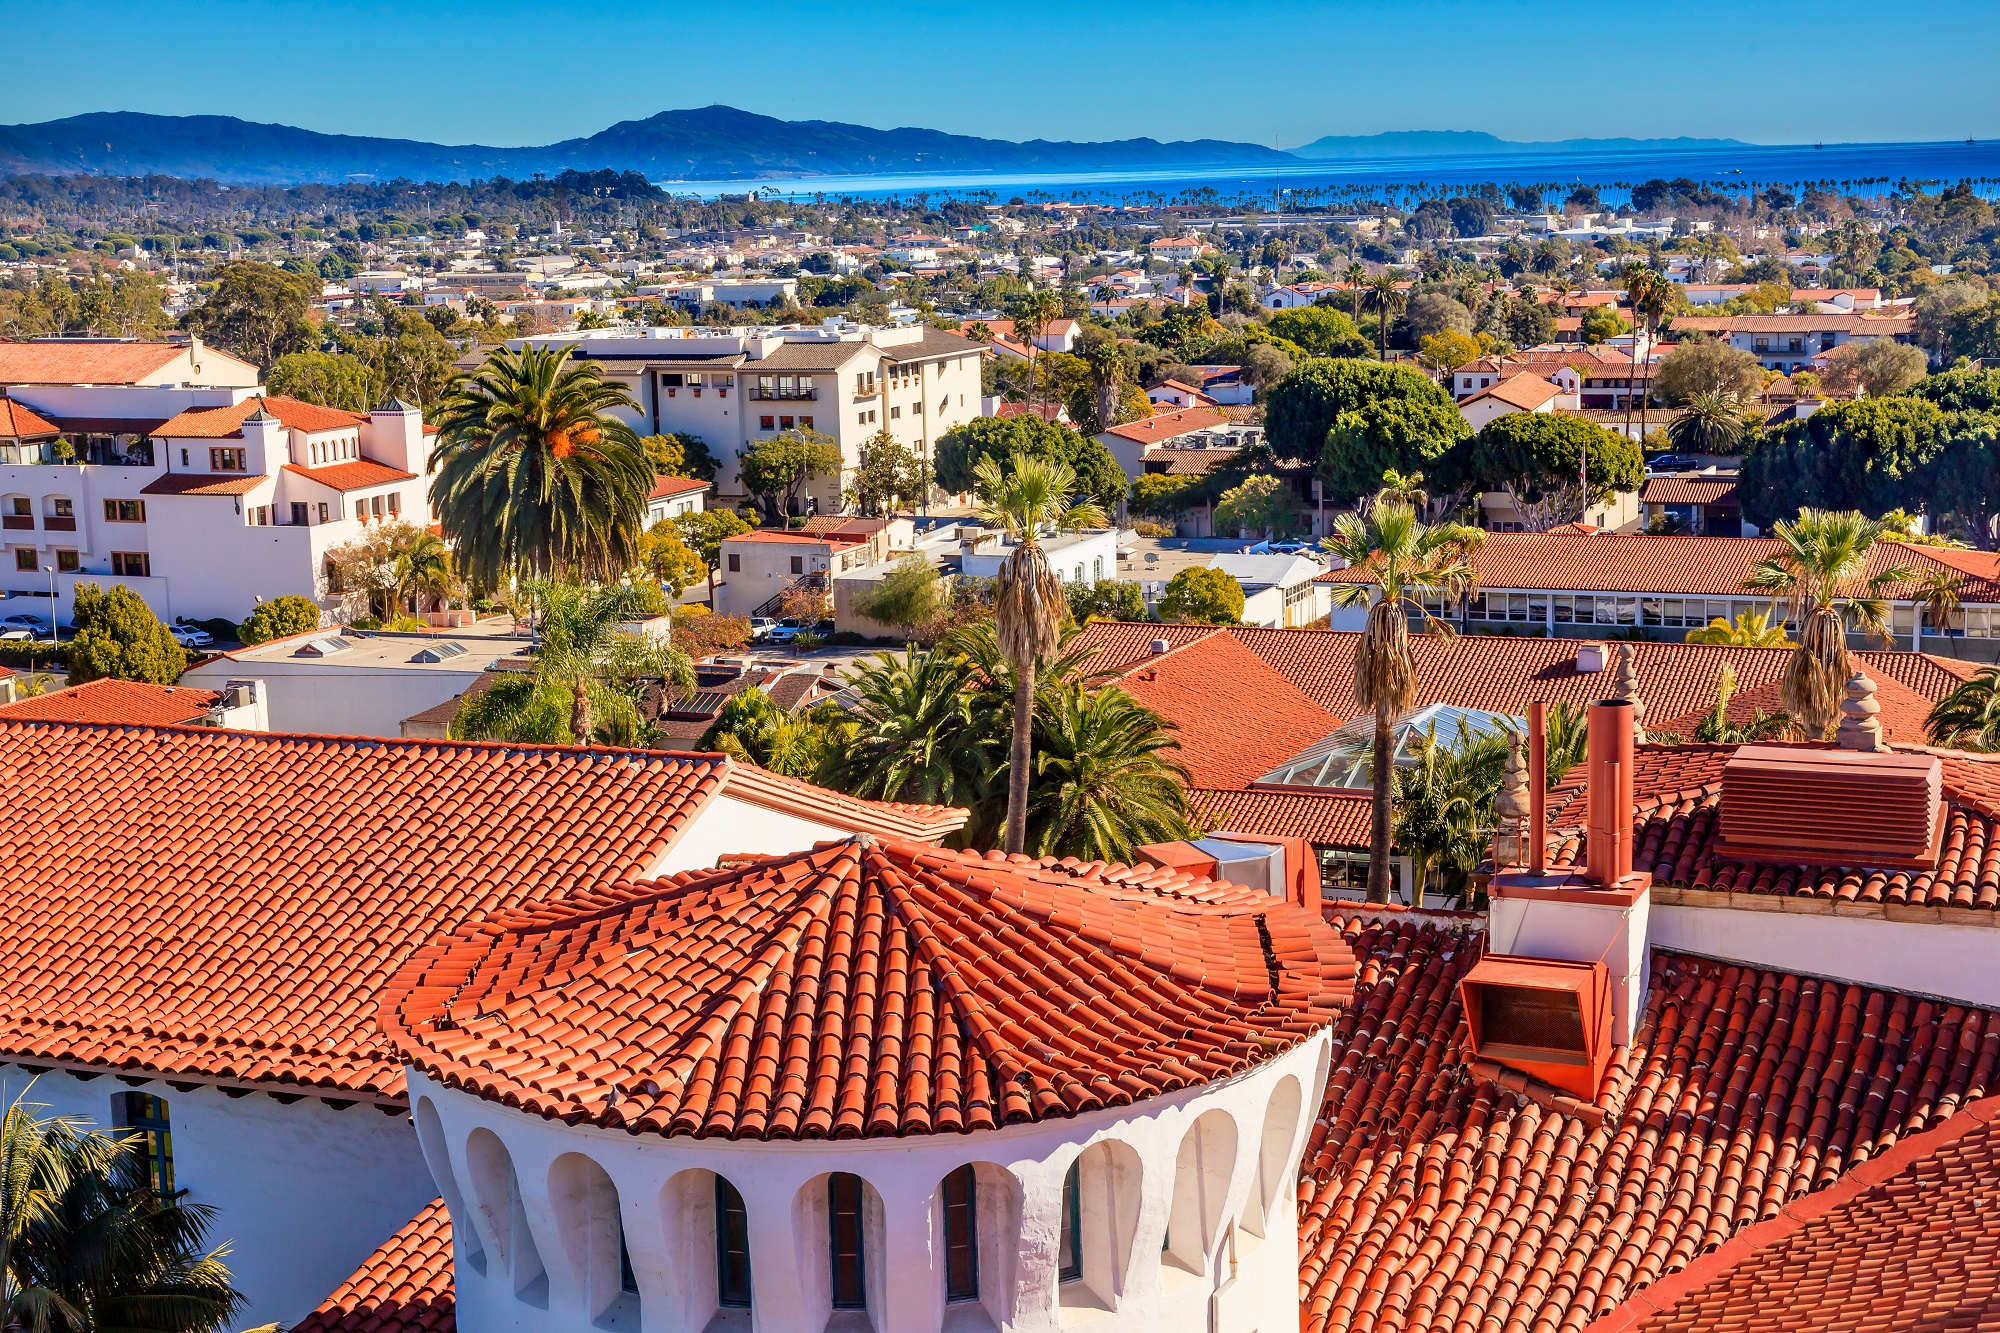 America's Riviera - Santa Barbara